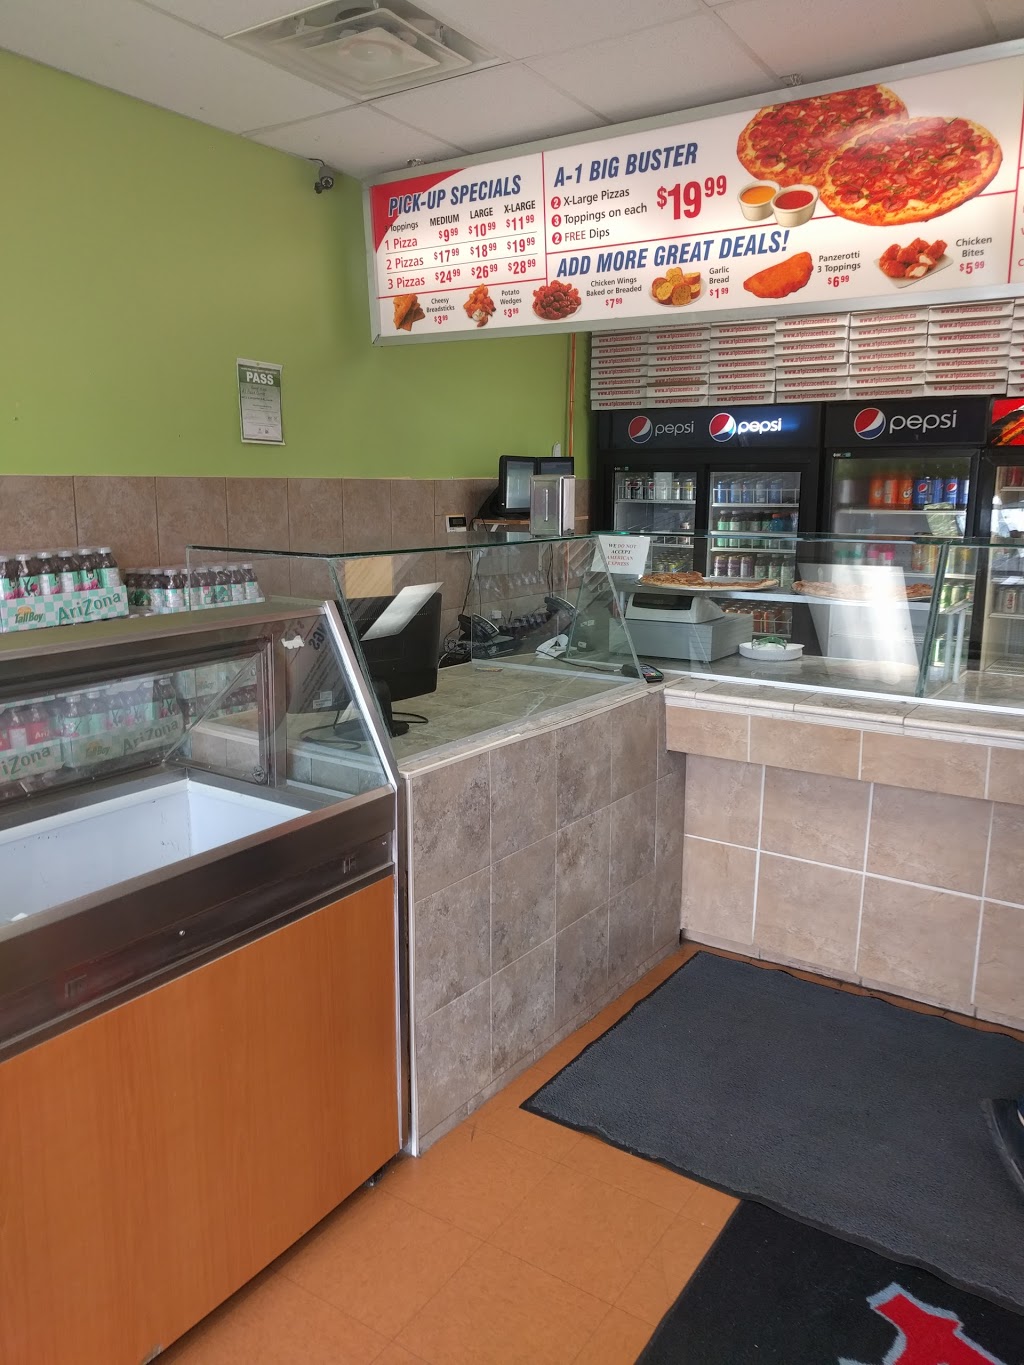 A1 Pizza Centre | 2 Castlewood Blvd, Dundas, ON L9H 7M8, Canada | Phone: (905) 627-5051